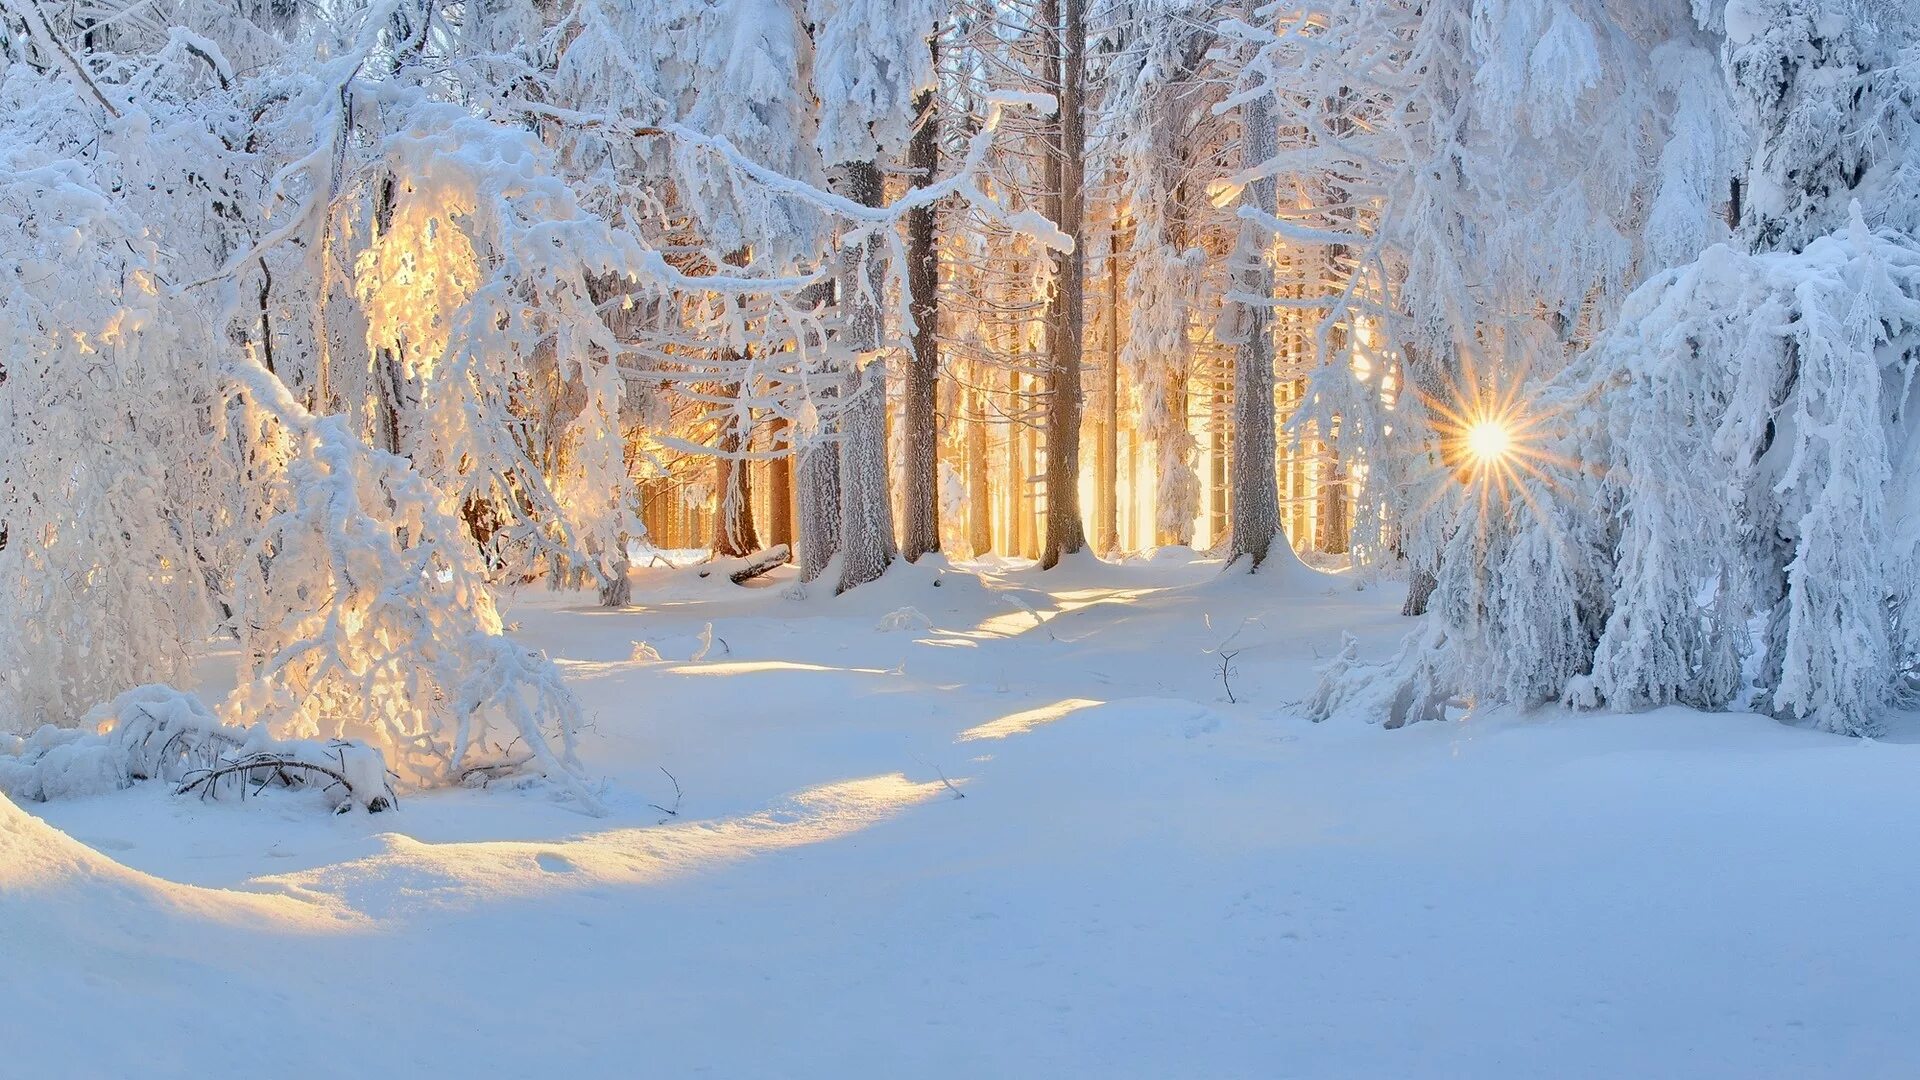 Слушать песню холодно на морозе. Зима снег. Сказочная зима. Зимний лес. Зимняя природа.